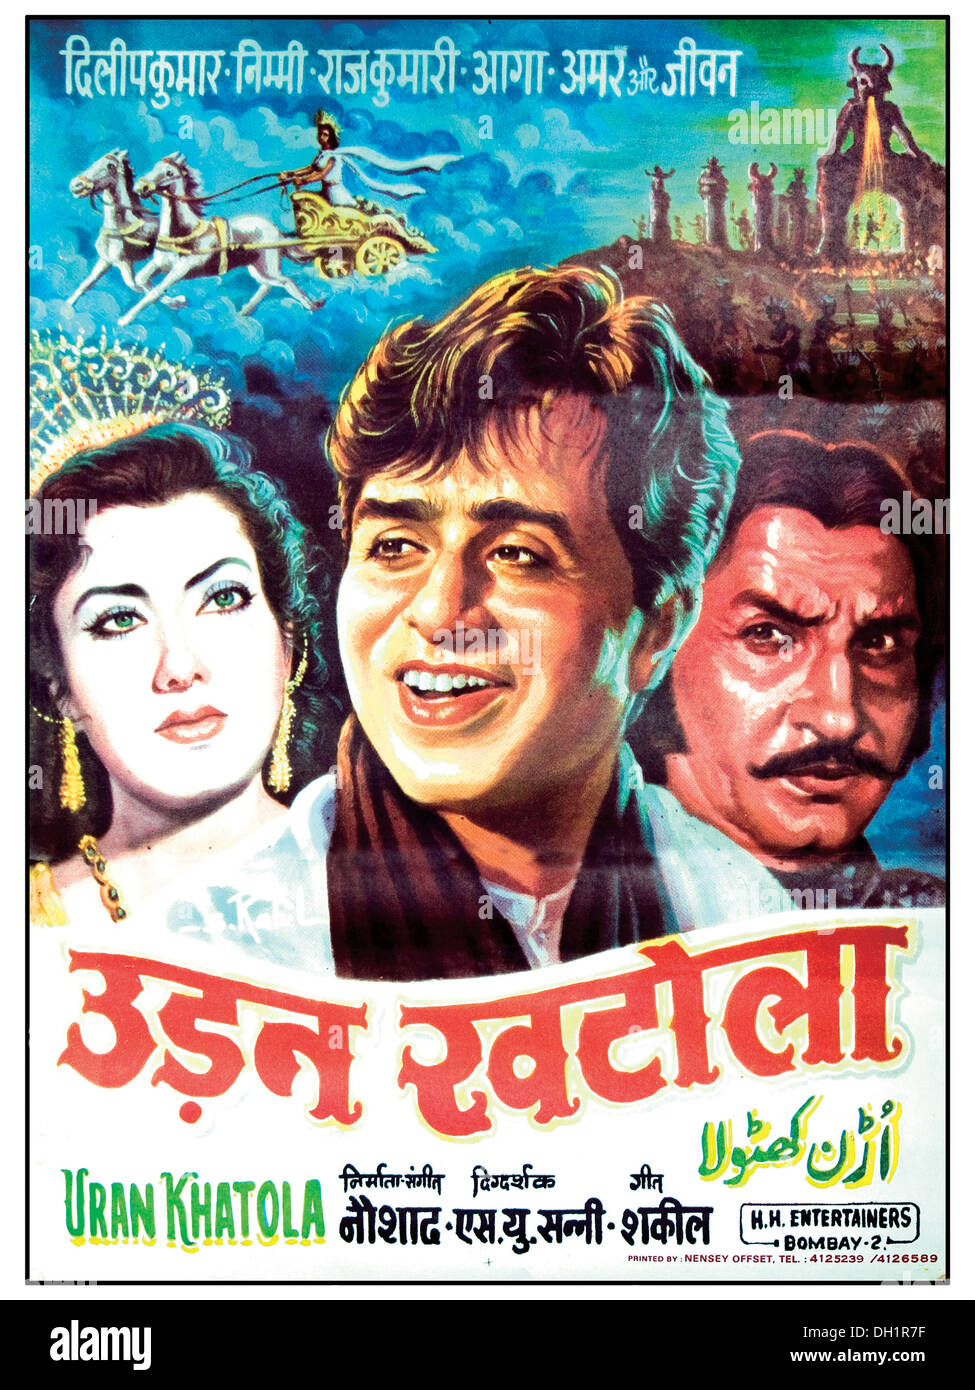 Indian bollywood hindi movie film poster of Uran Khatola, Dilip Kumar, Nimmi, Raj Kumari, Aga, Amar, Jeewan, Naushad, Shakeel, India, Asia Stock Photo